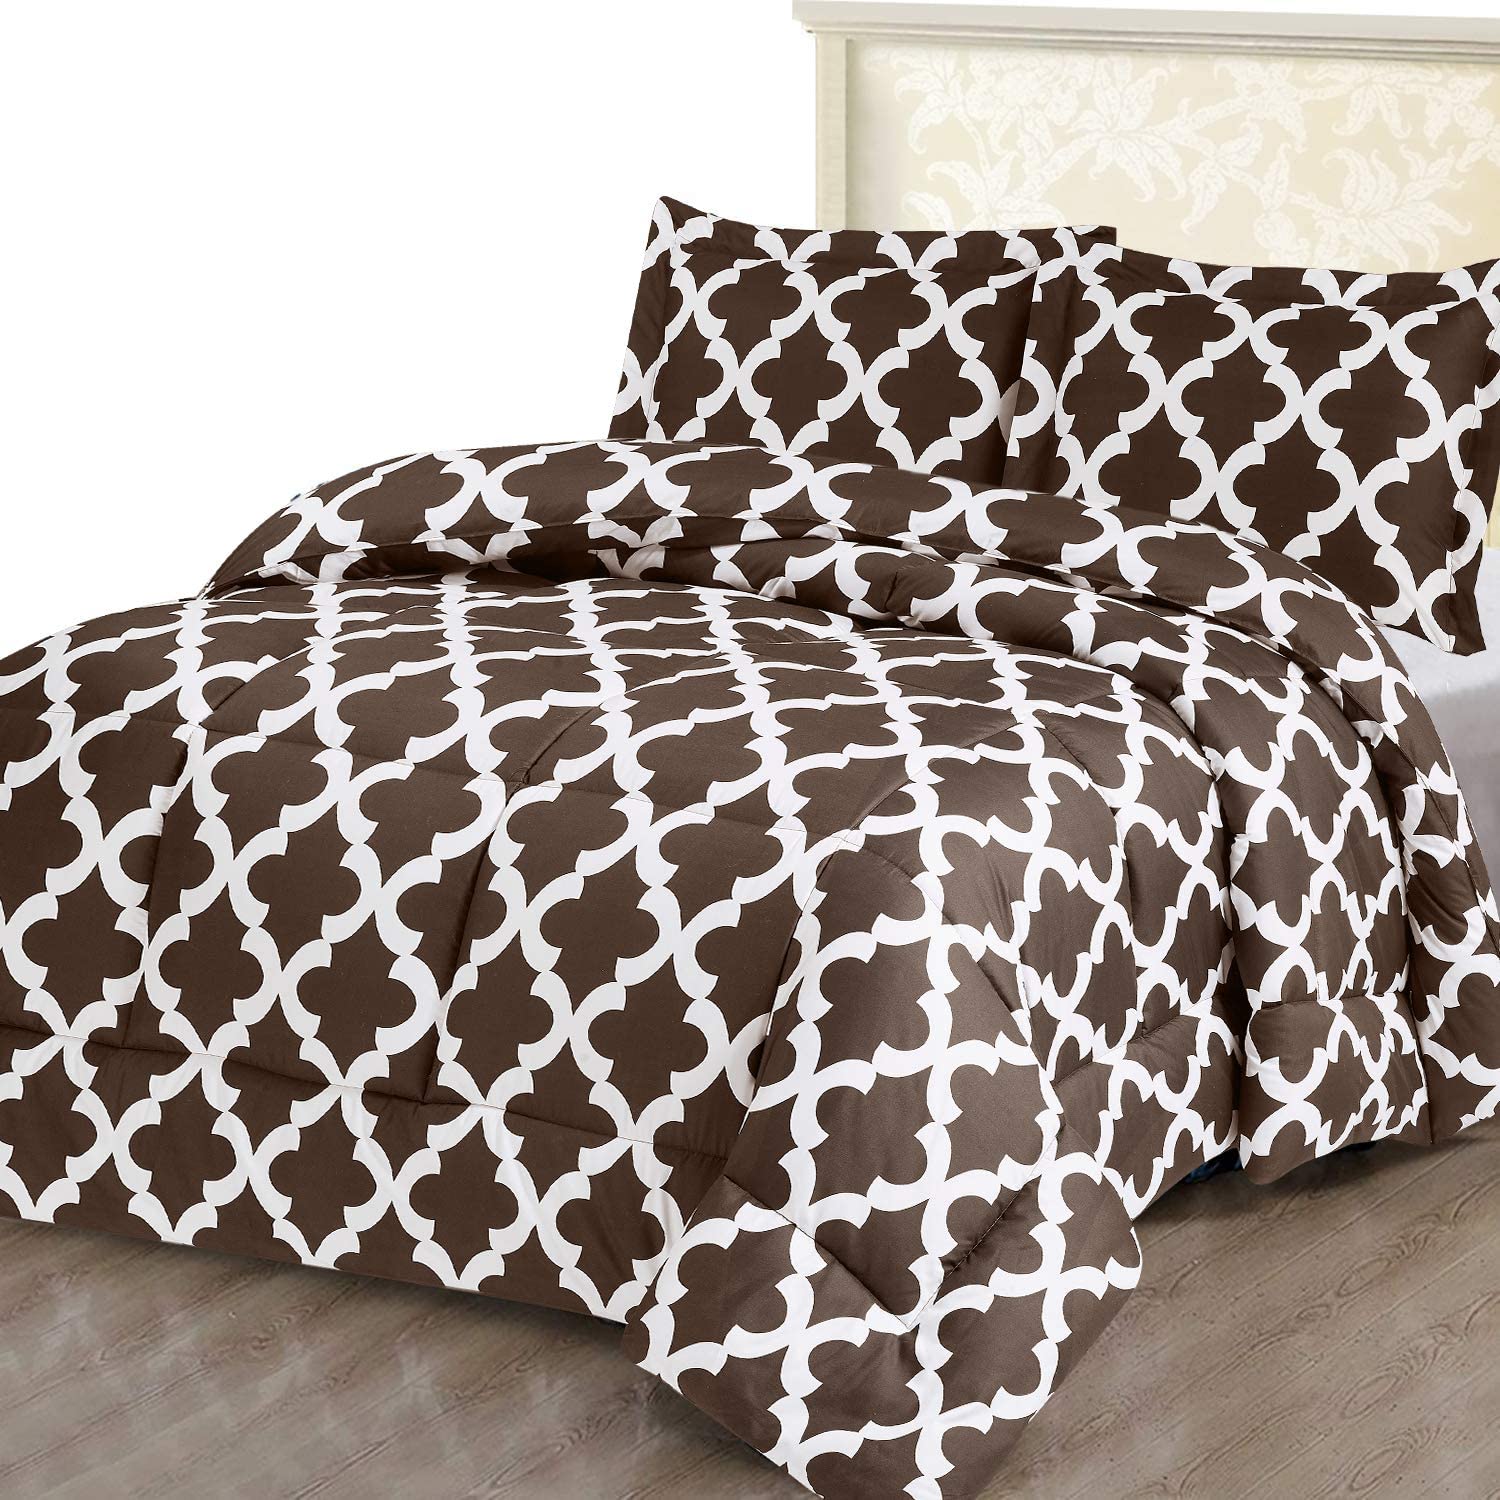 Luxurio with 2 Pillow Shams Queen, Grey Utopia Bedding Printed Comforter Set 